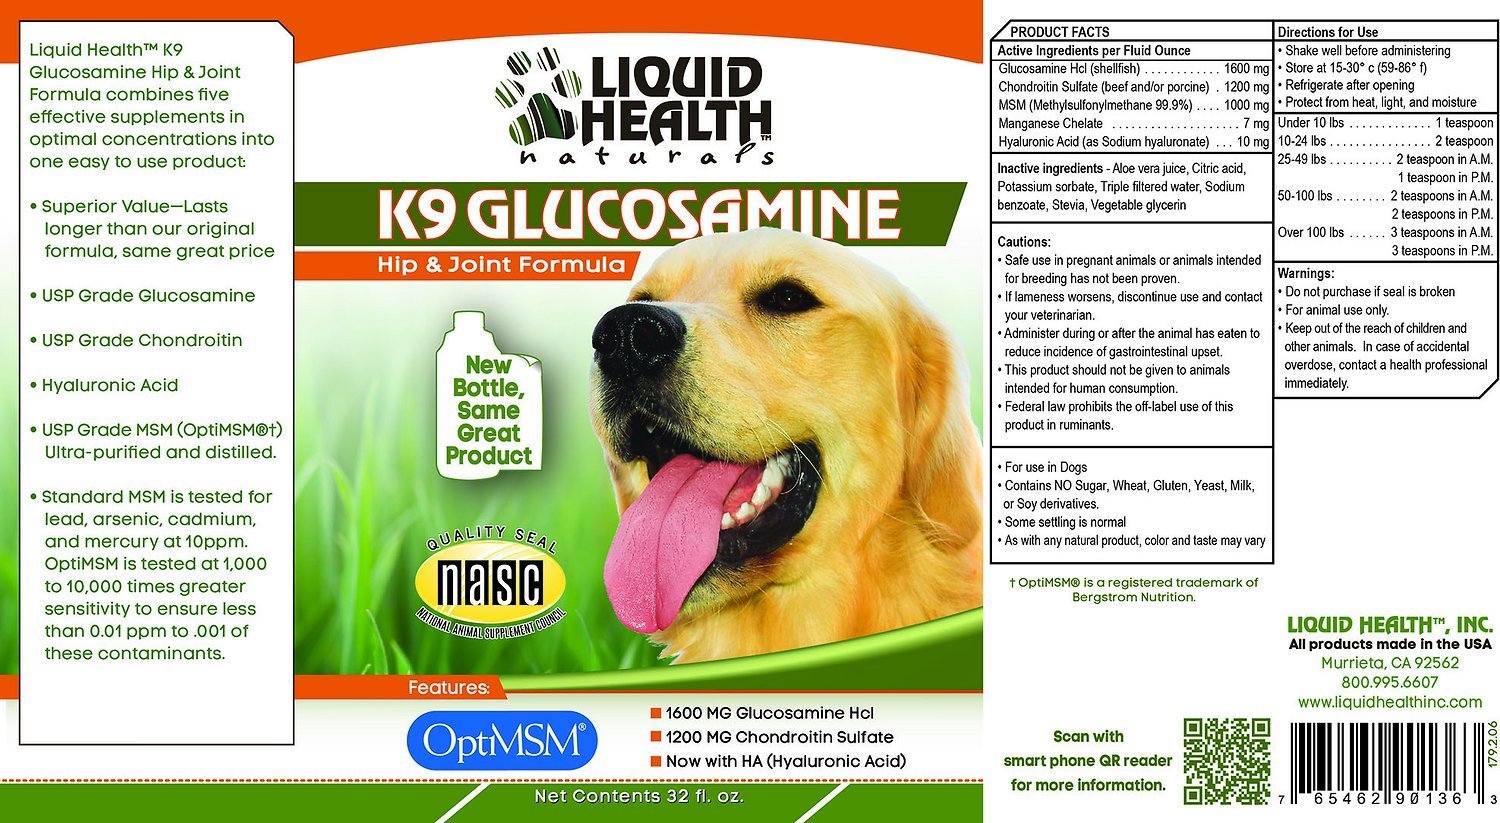 Liquid Health Naturals K9 Glucosamine